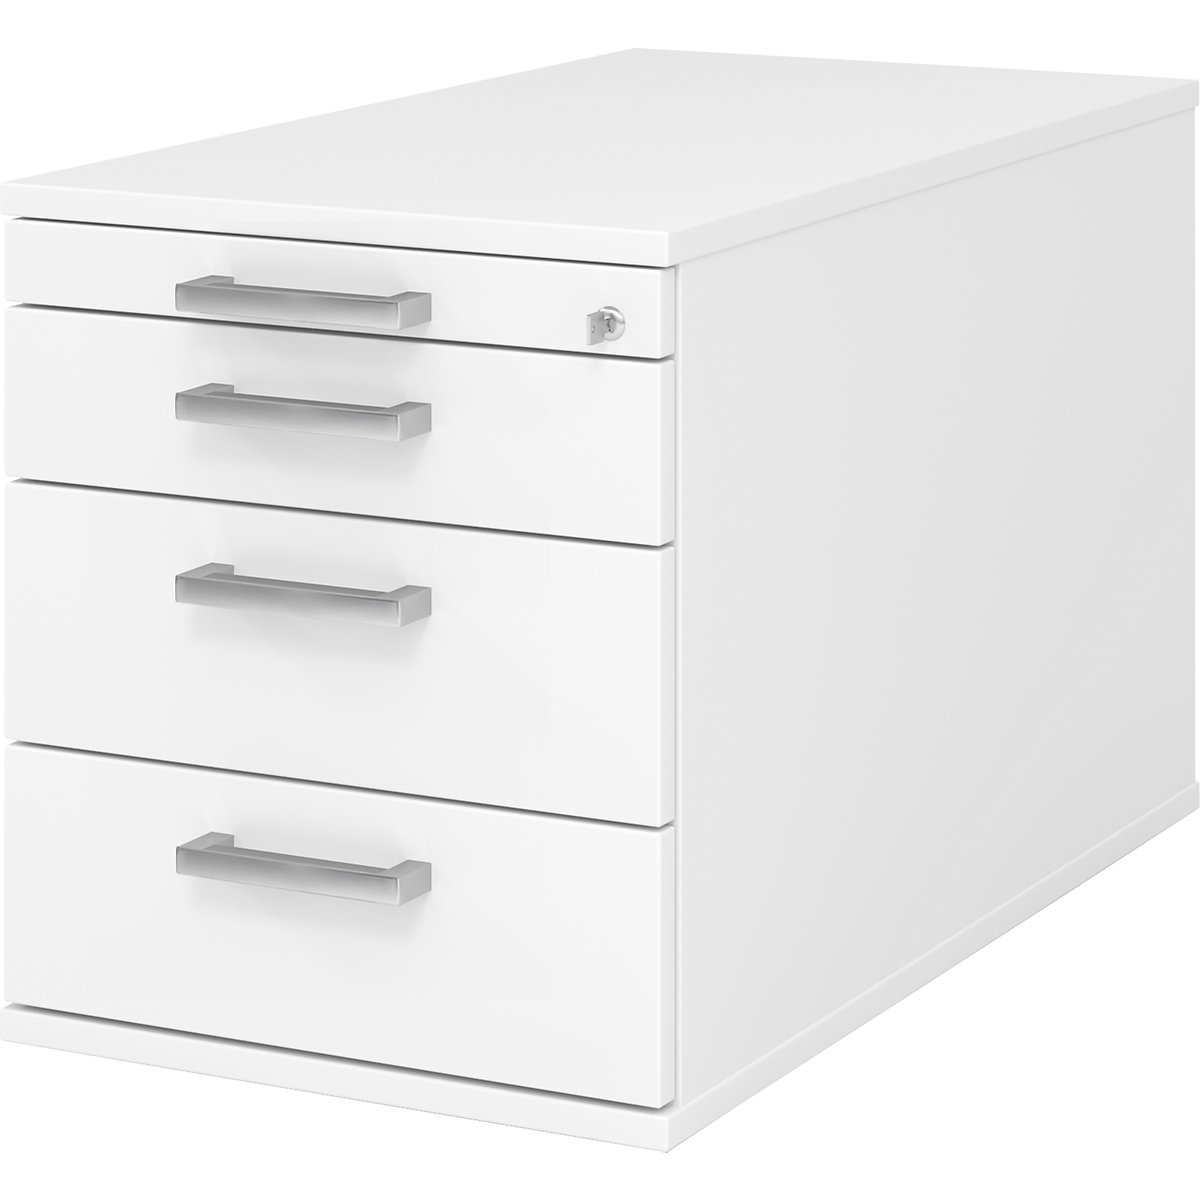 Mobile pedestal NICOLA – eurokraft pro, 1 utensil drawer / 3 material drawers, white-8